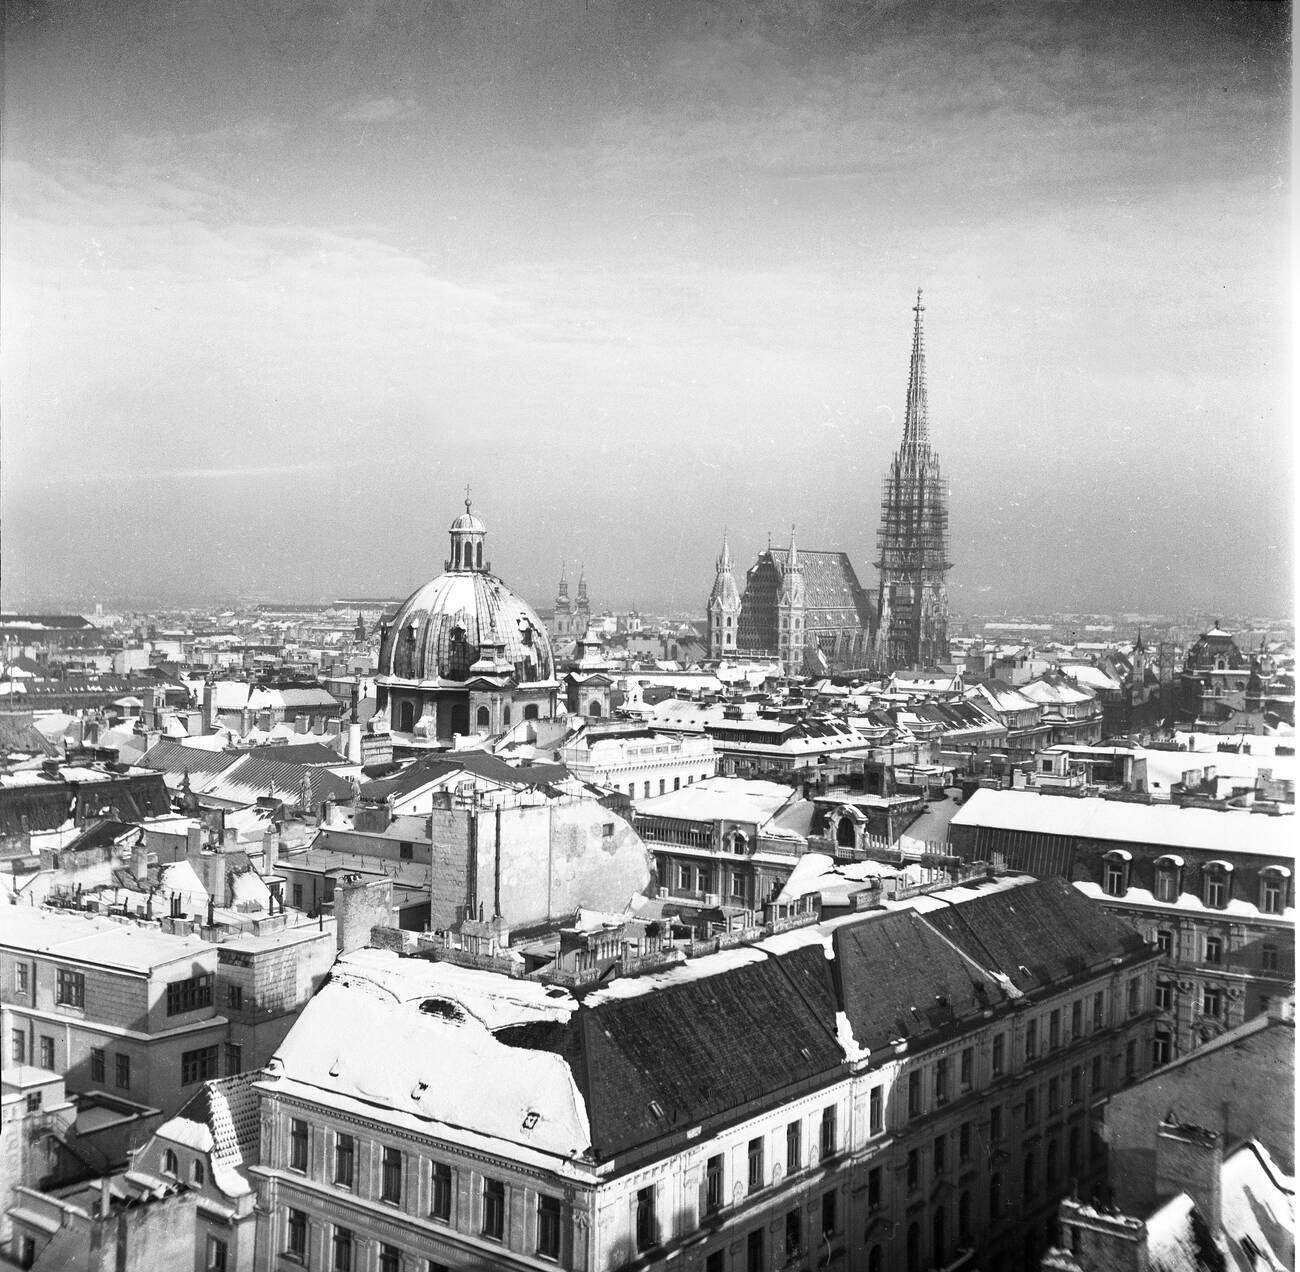 Rooftops of Vienna, Austria, in winter 1956.